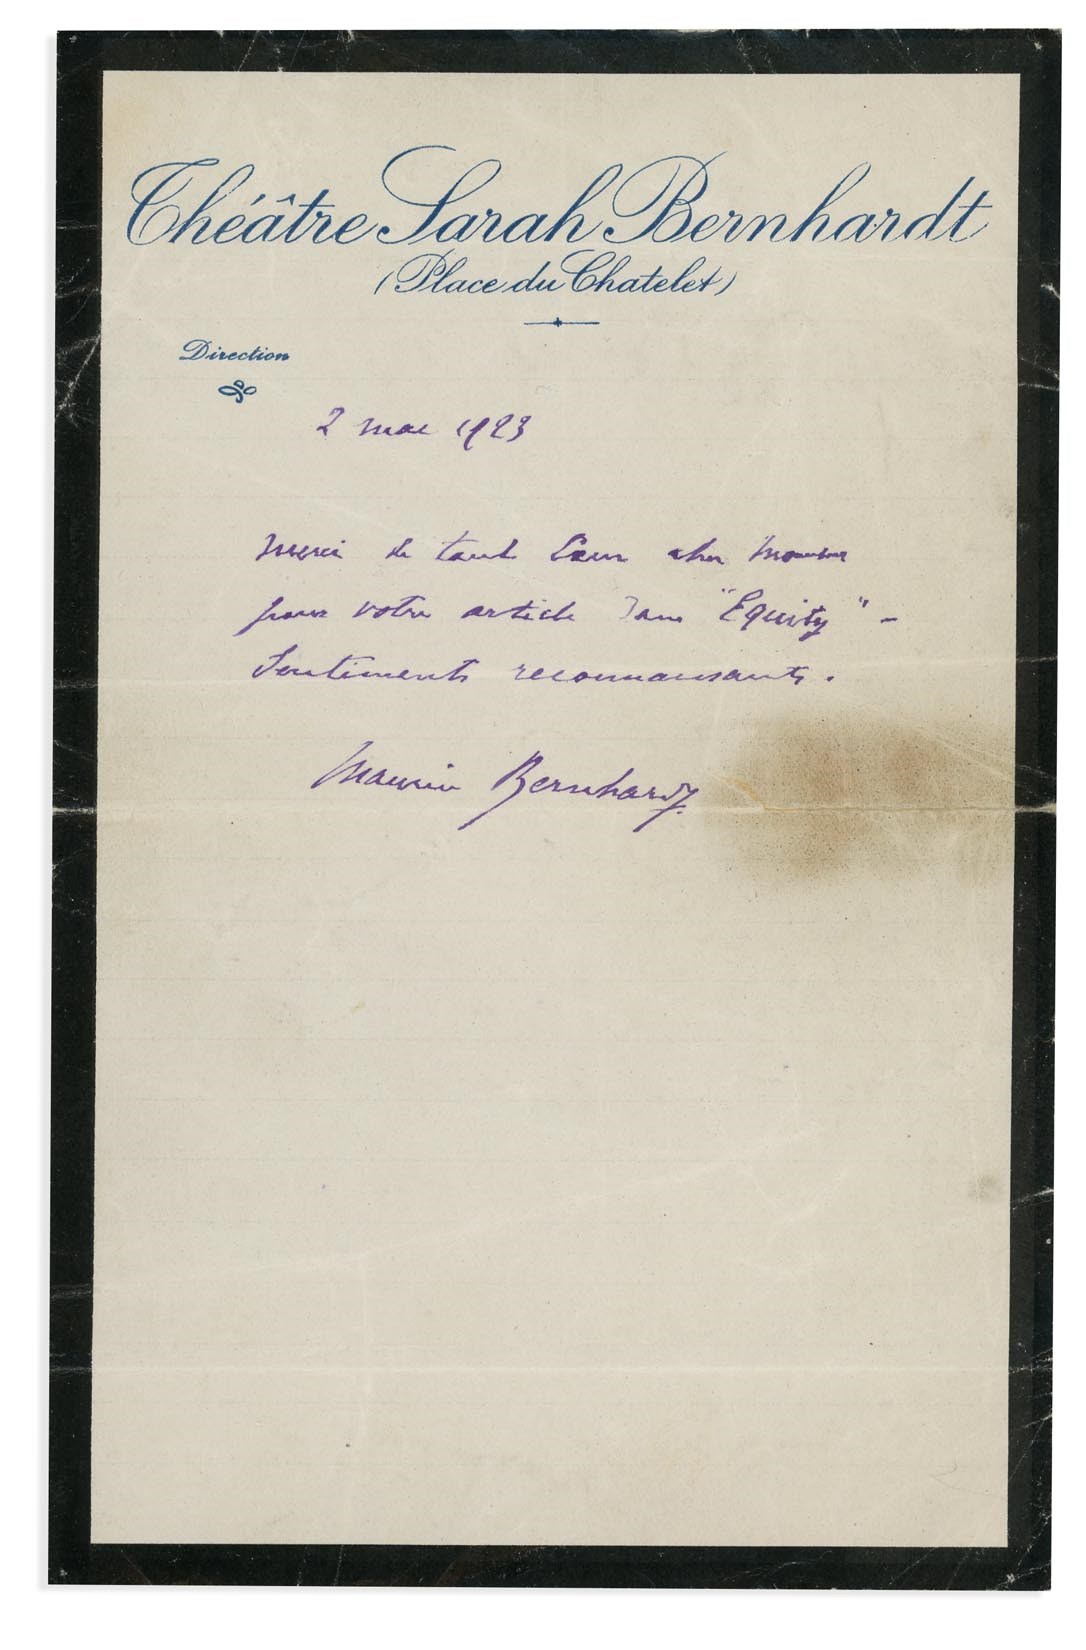 - 1923 Maurice Bernhardt ALS with Important Sarah Bernhardt Content